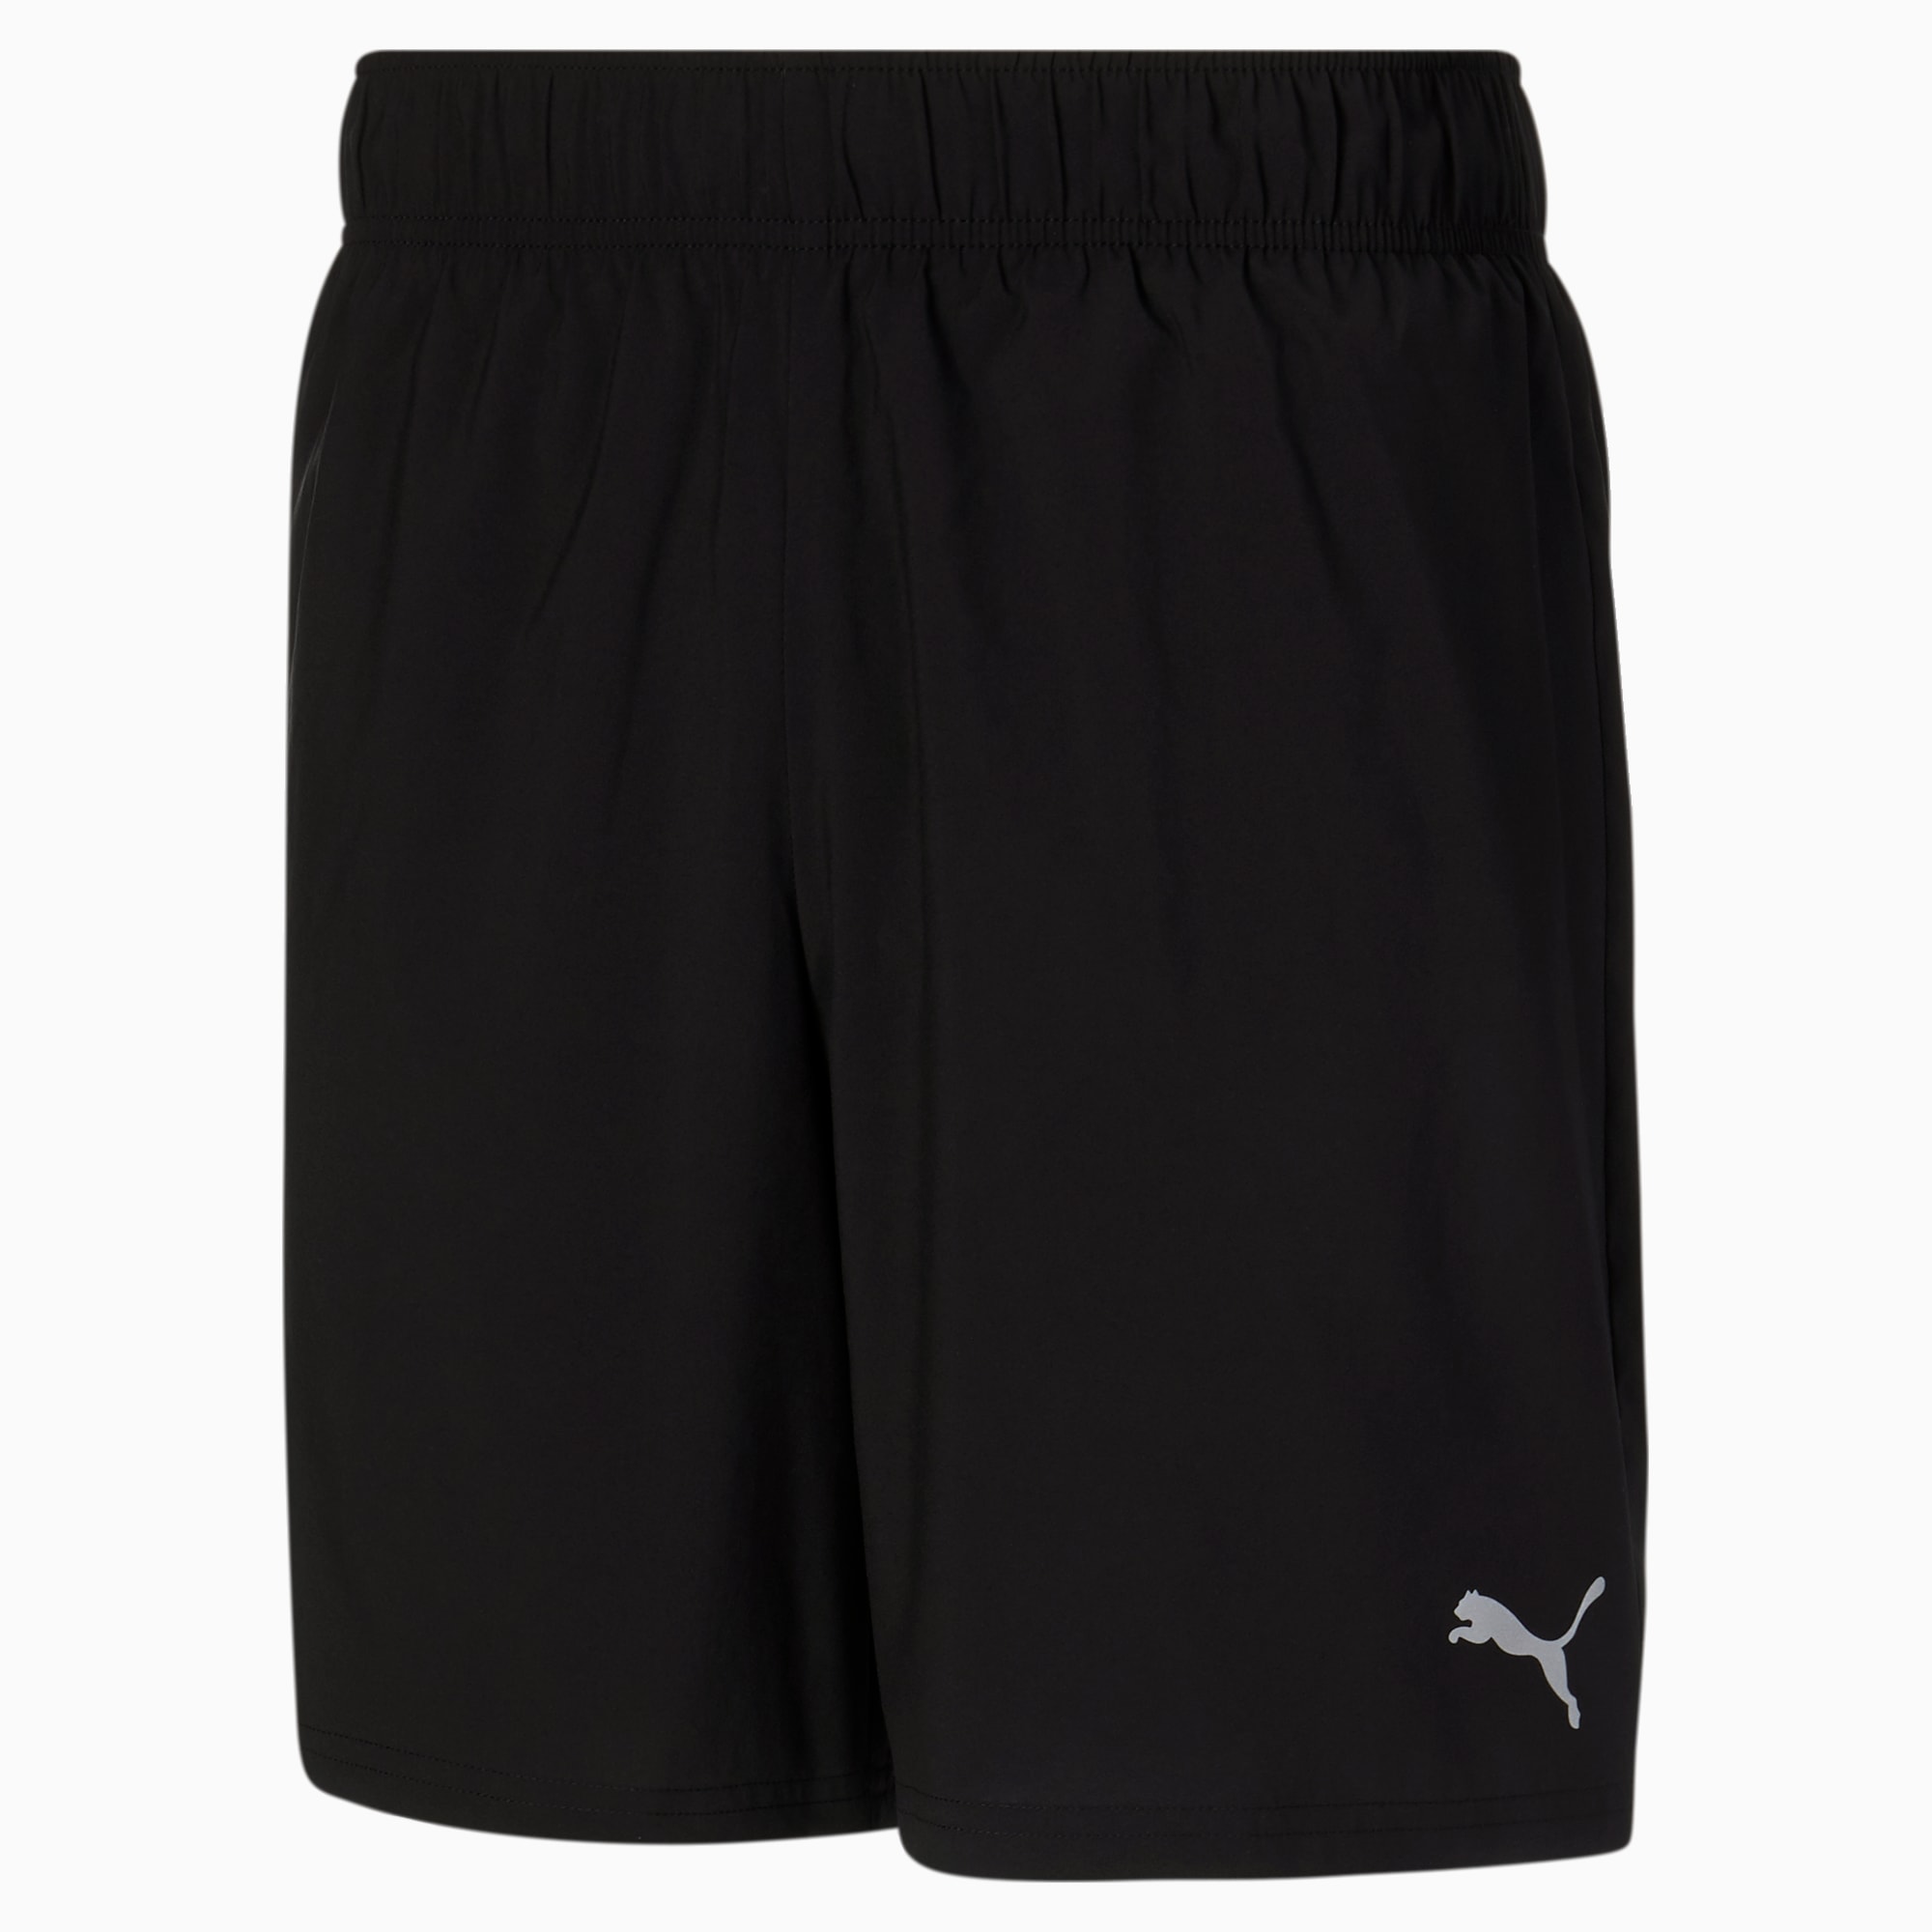 PUMA Favourite 2-in-1 Men's Running Shorts, Black, Size XXL, Clothing